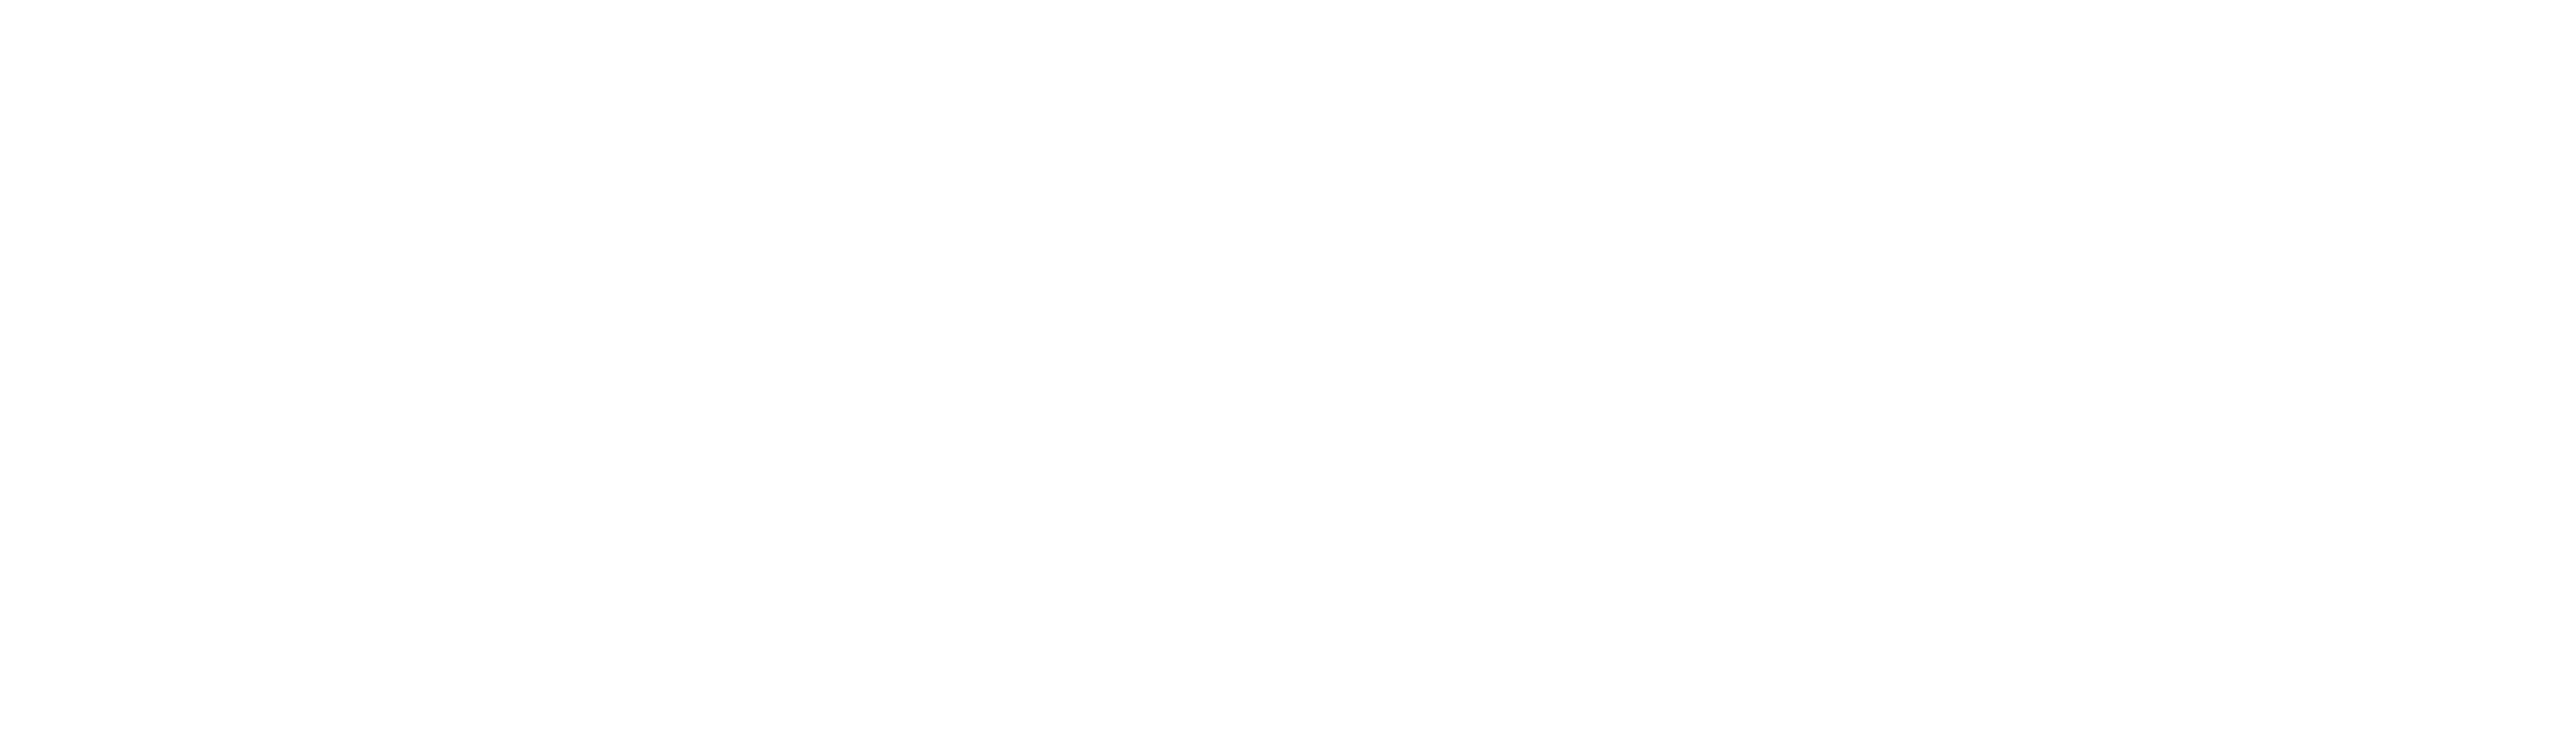 HeartlandBank_TrustCompany